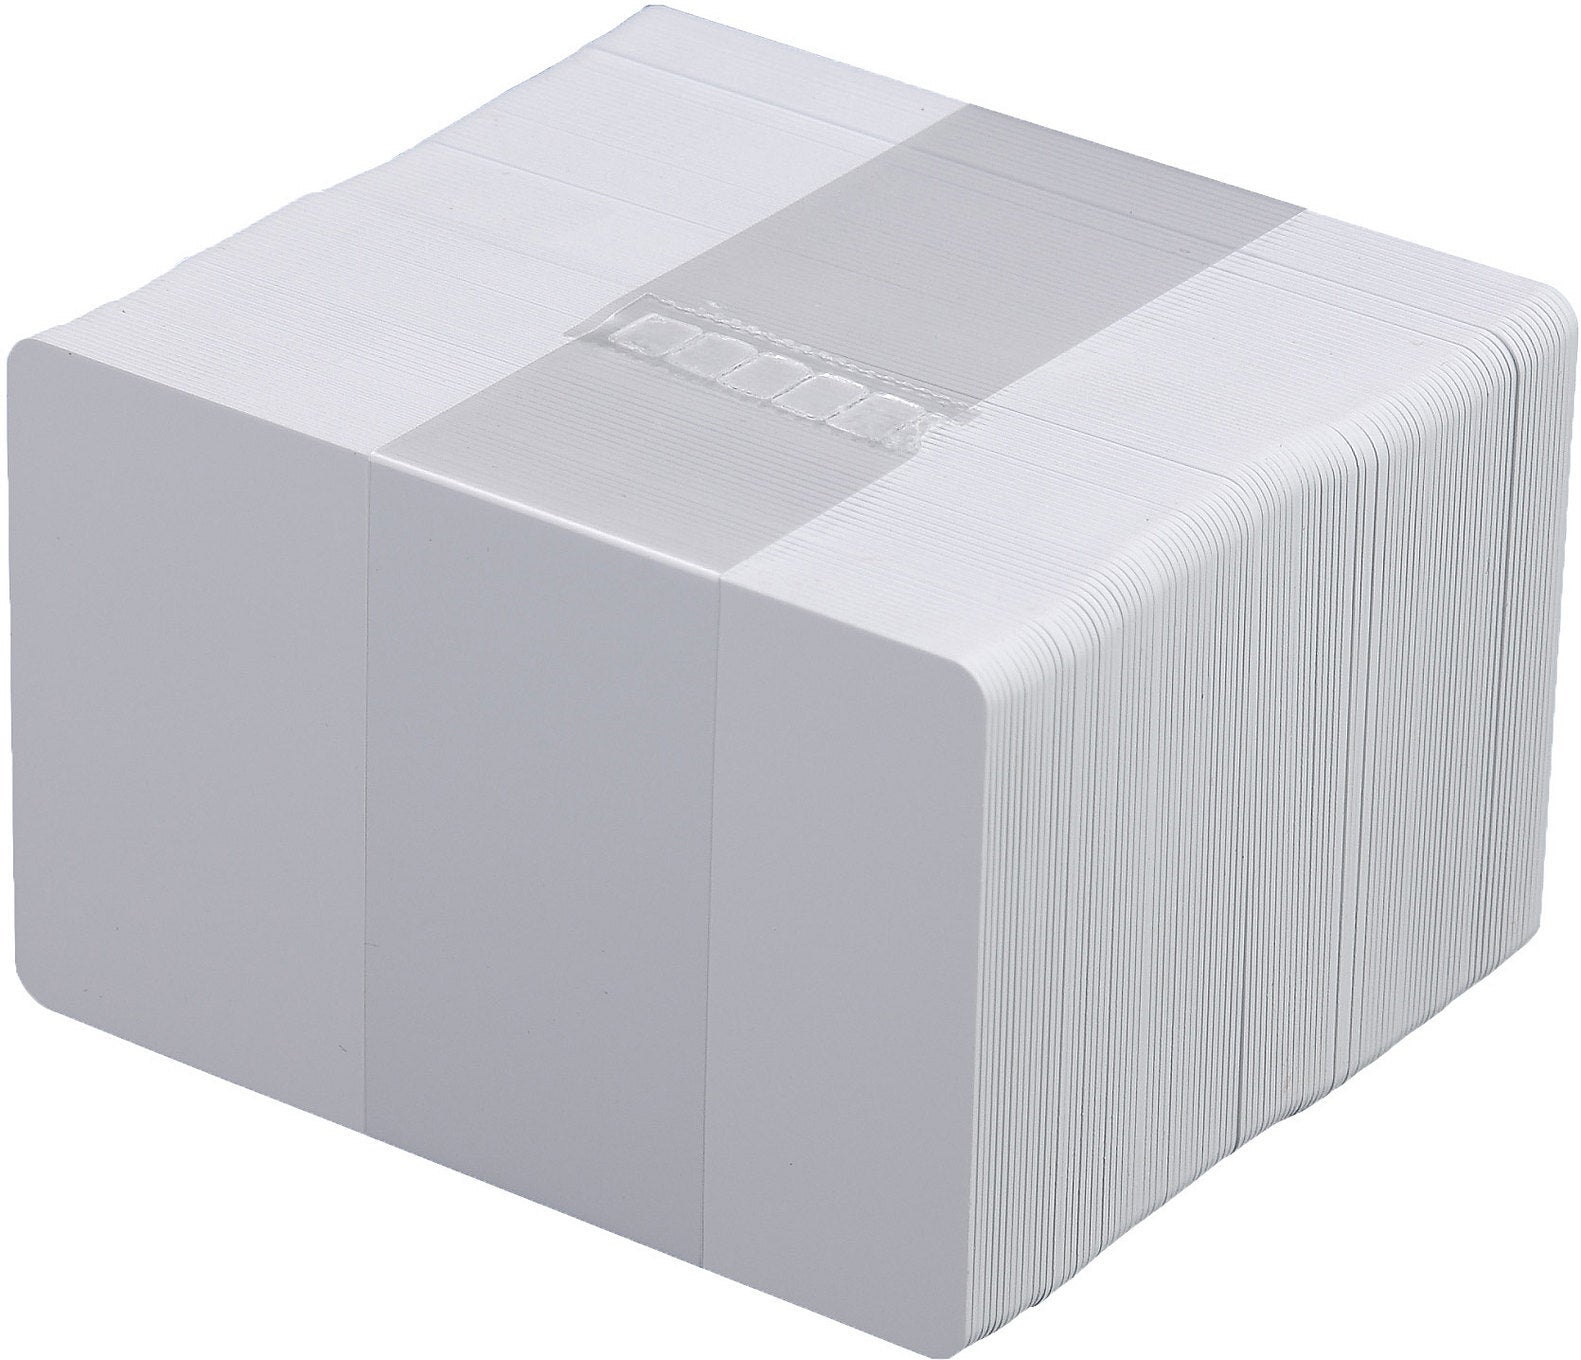 Blank White PVC Plastic ID Cards 760 micron | SPLIT PACKS - 10